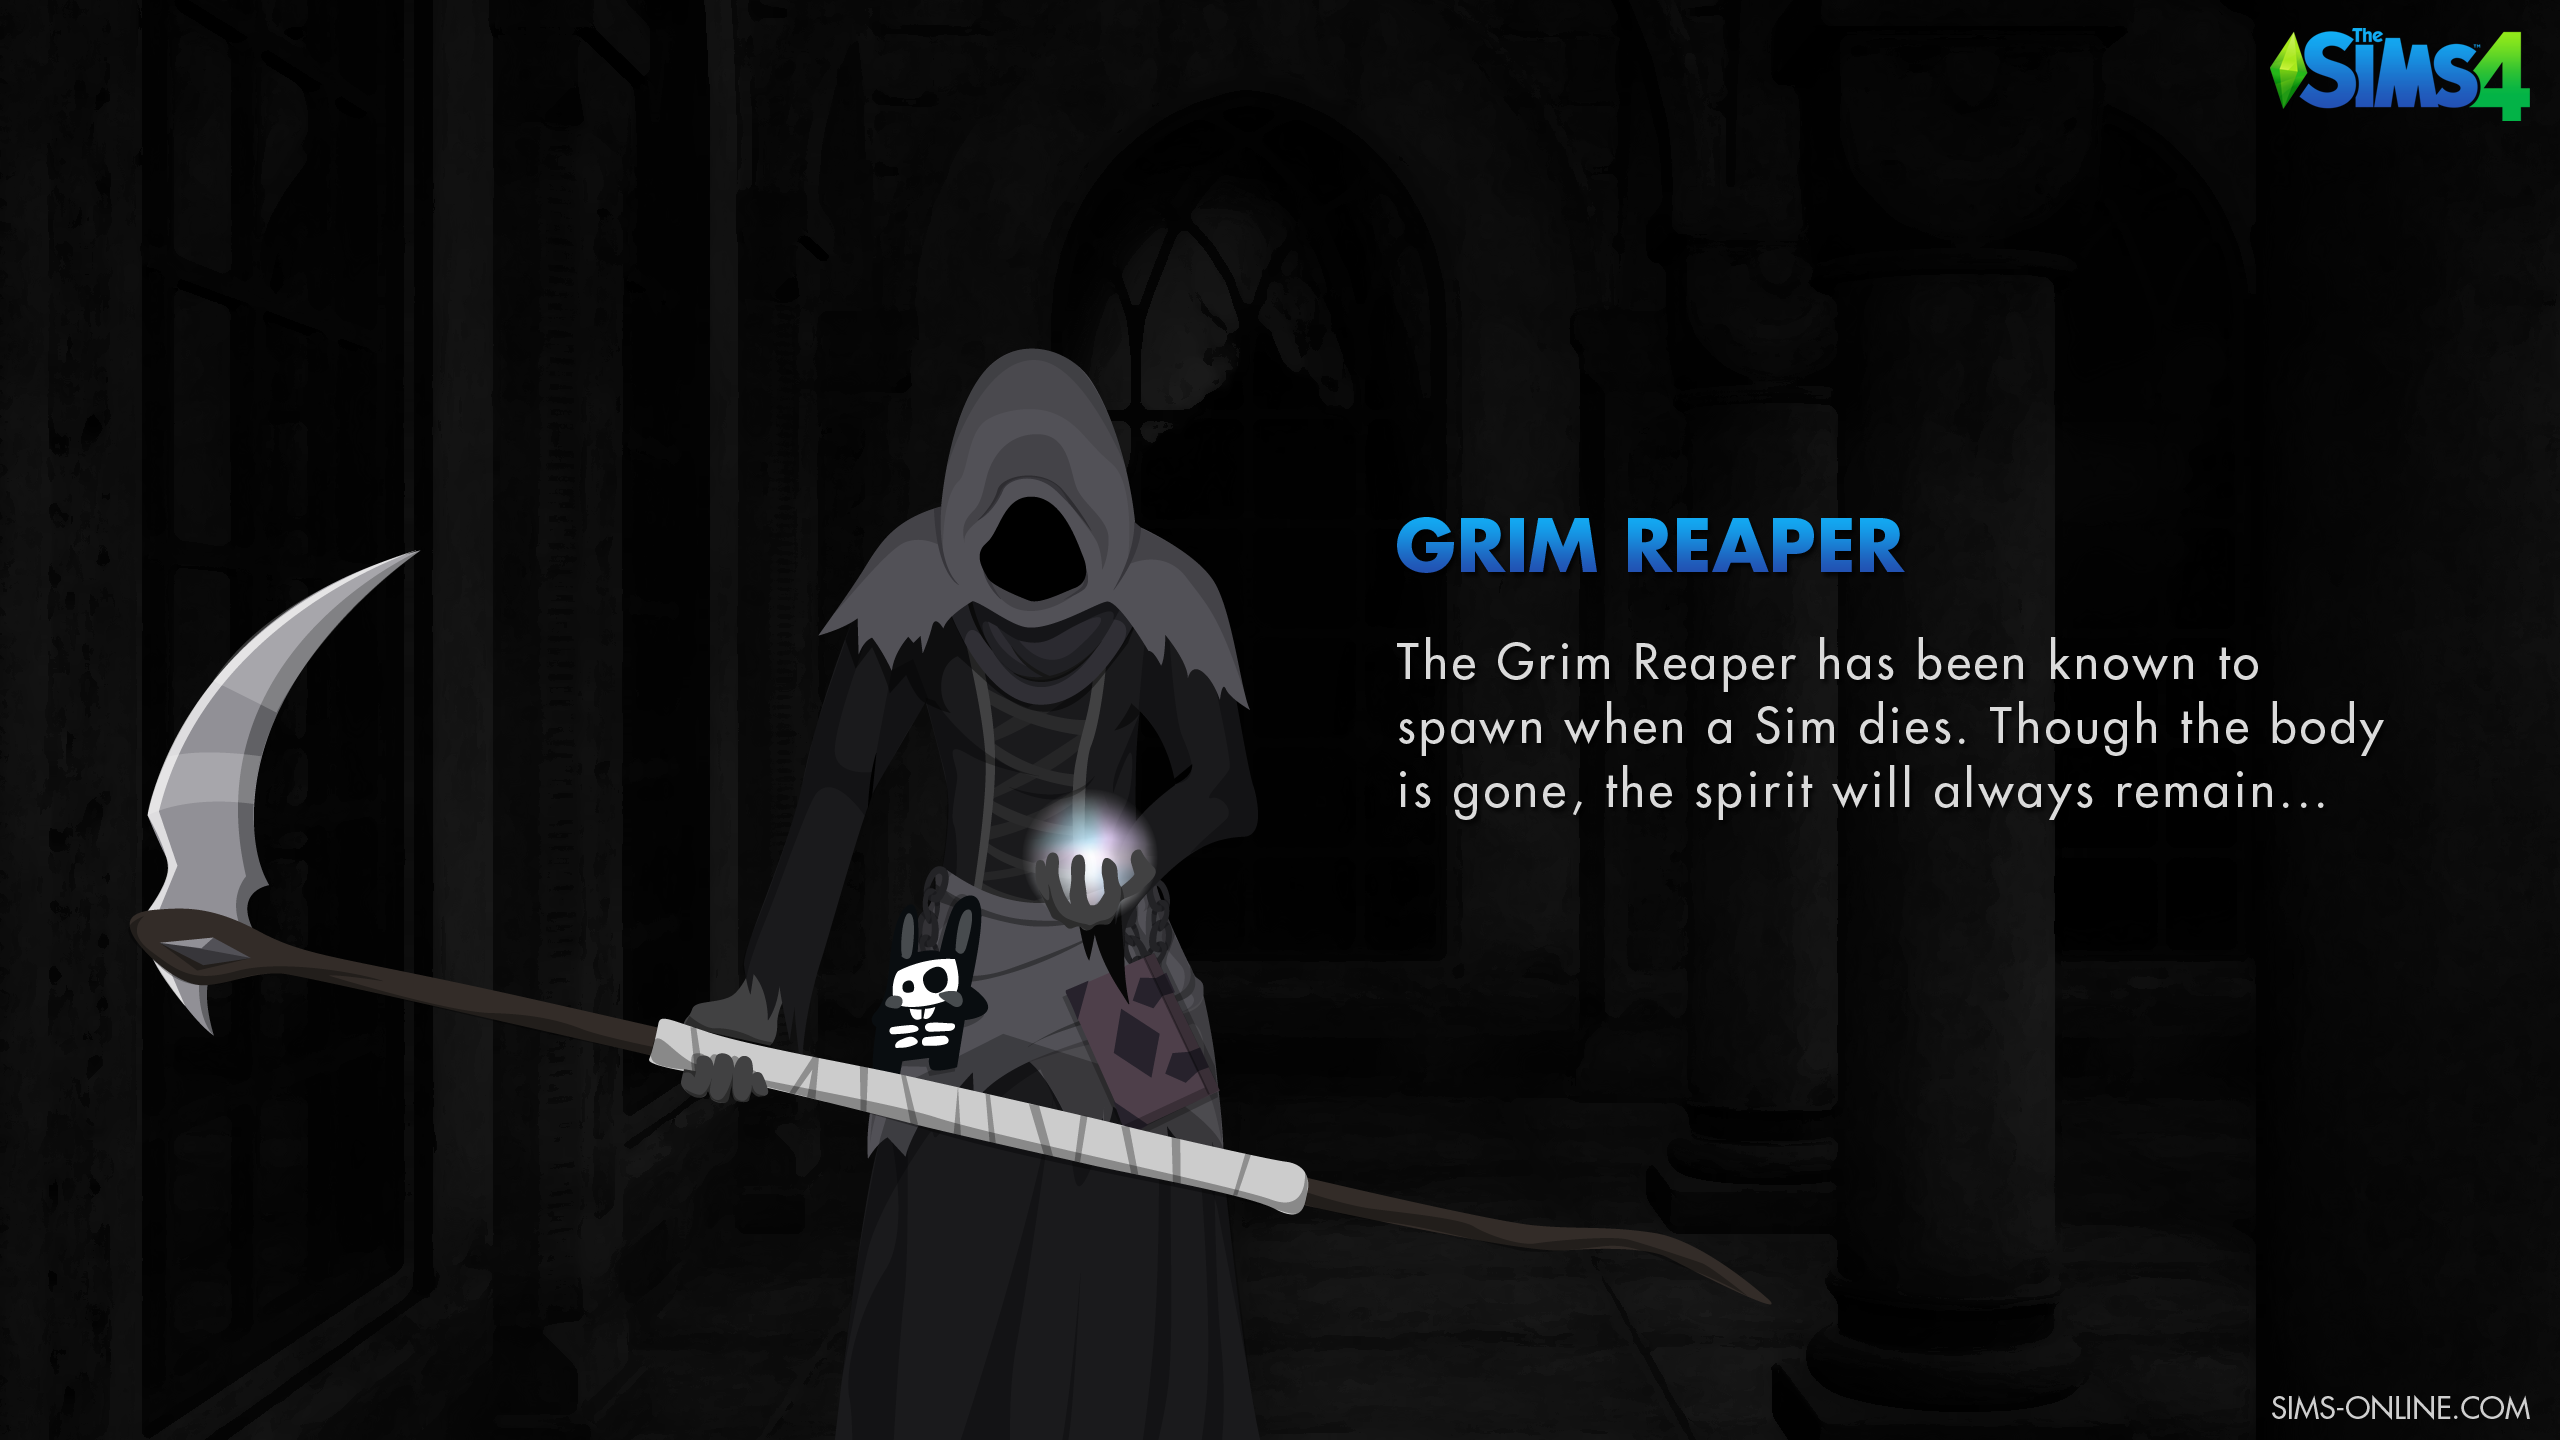 The Sims Grim Reaper Wallpaper Online